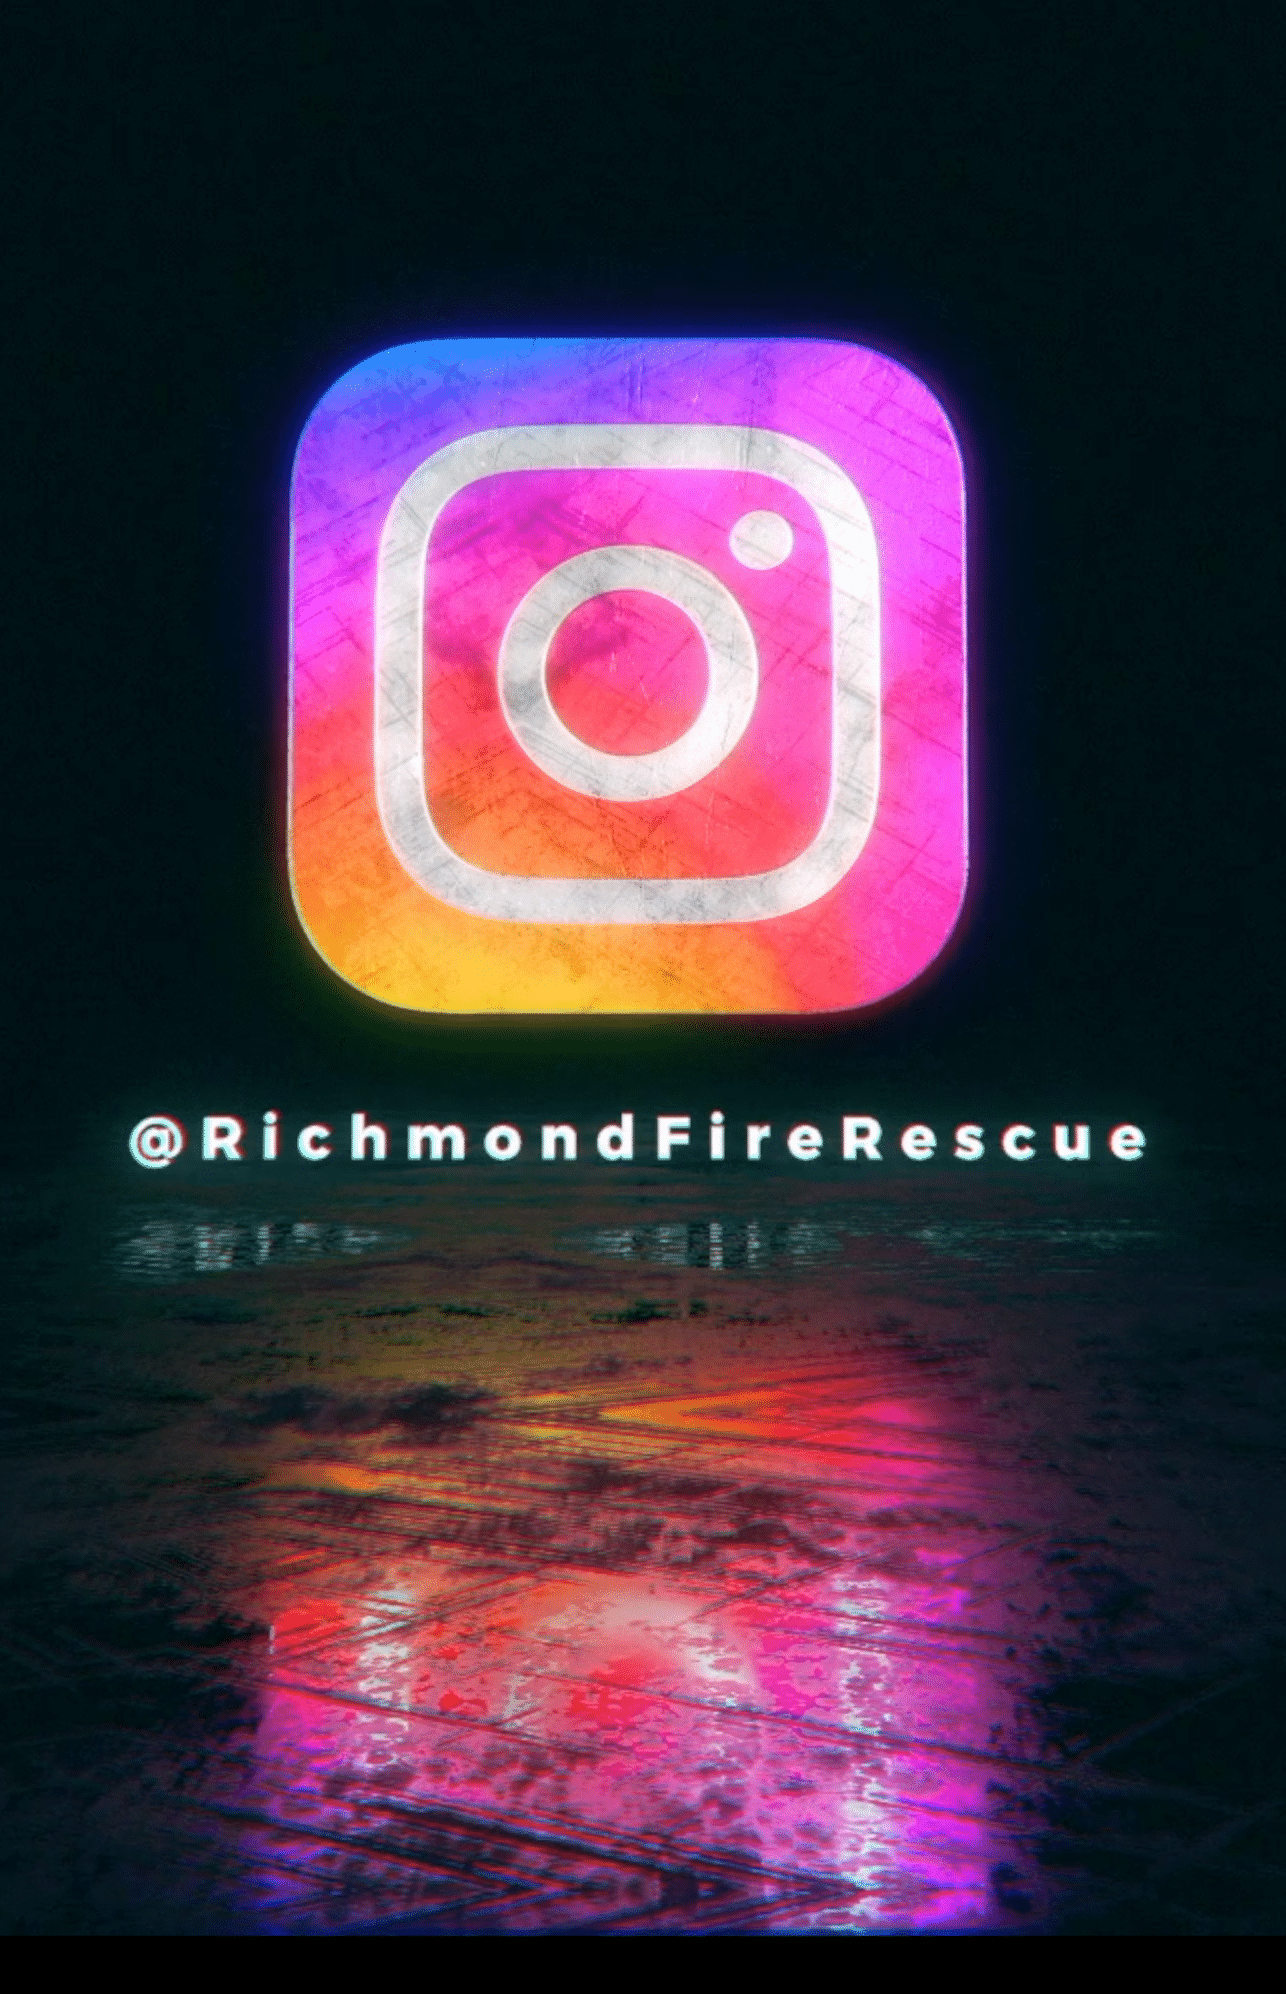 Instagram launches @ Richmond Fire Rescue